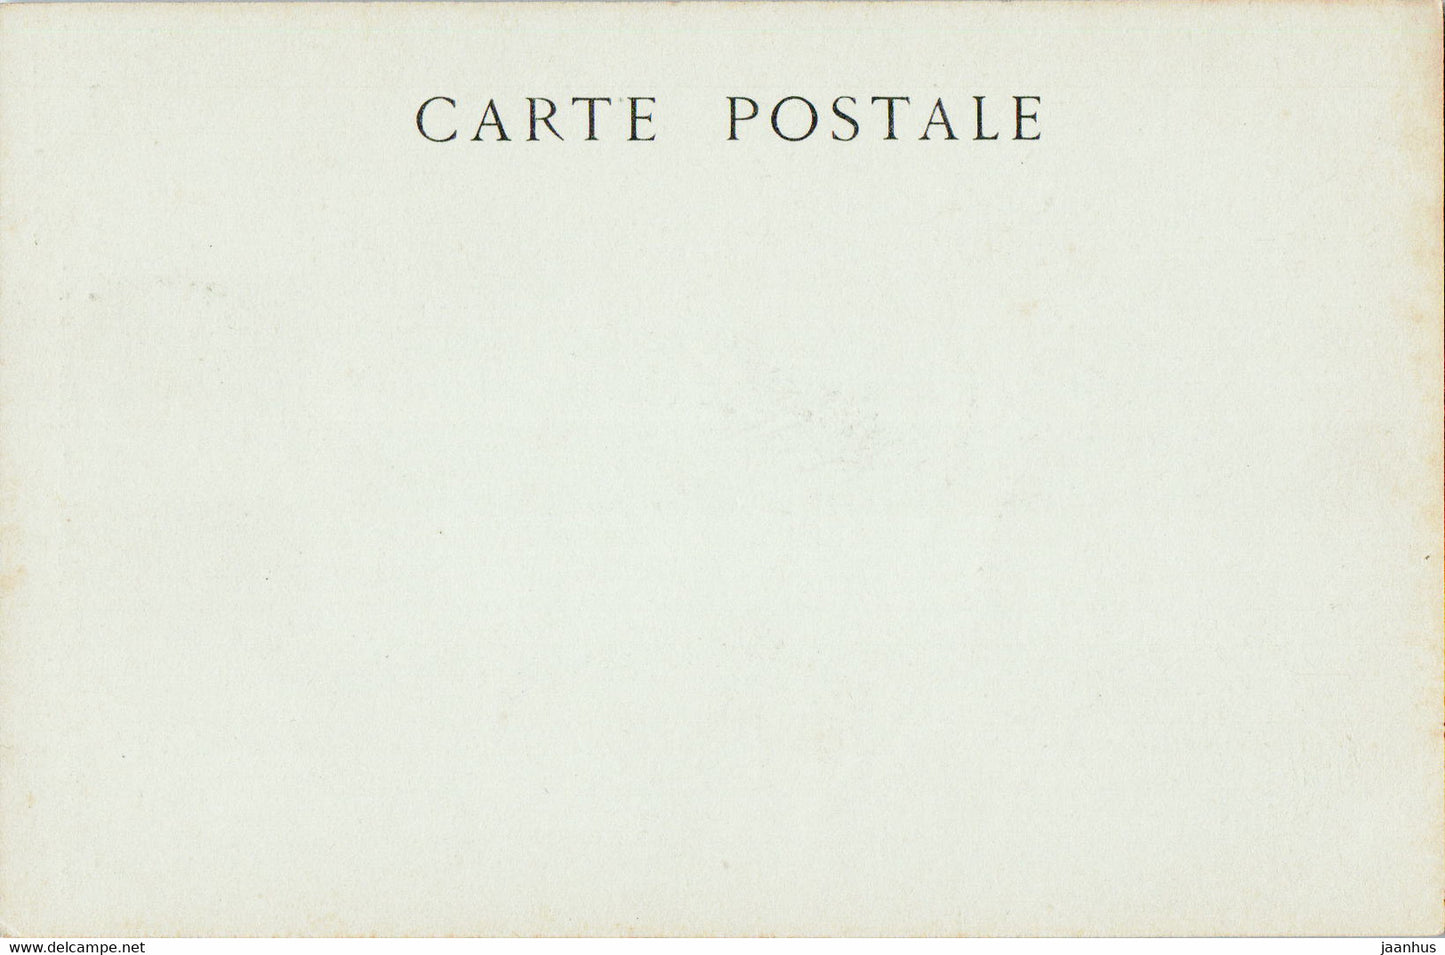 Foret de Fontainebleau - Rocher Cuvier Chatillon l'Aerolithe - 129 - old postcard - France - unused